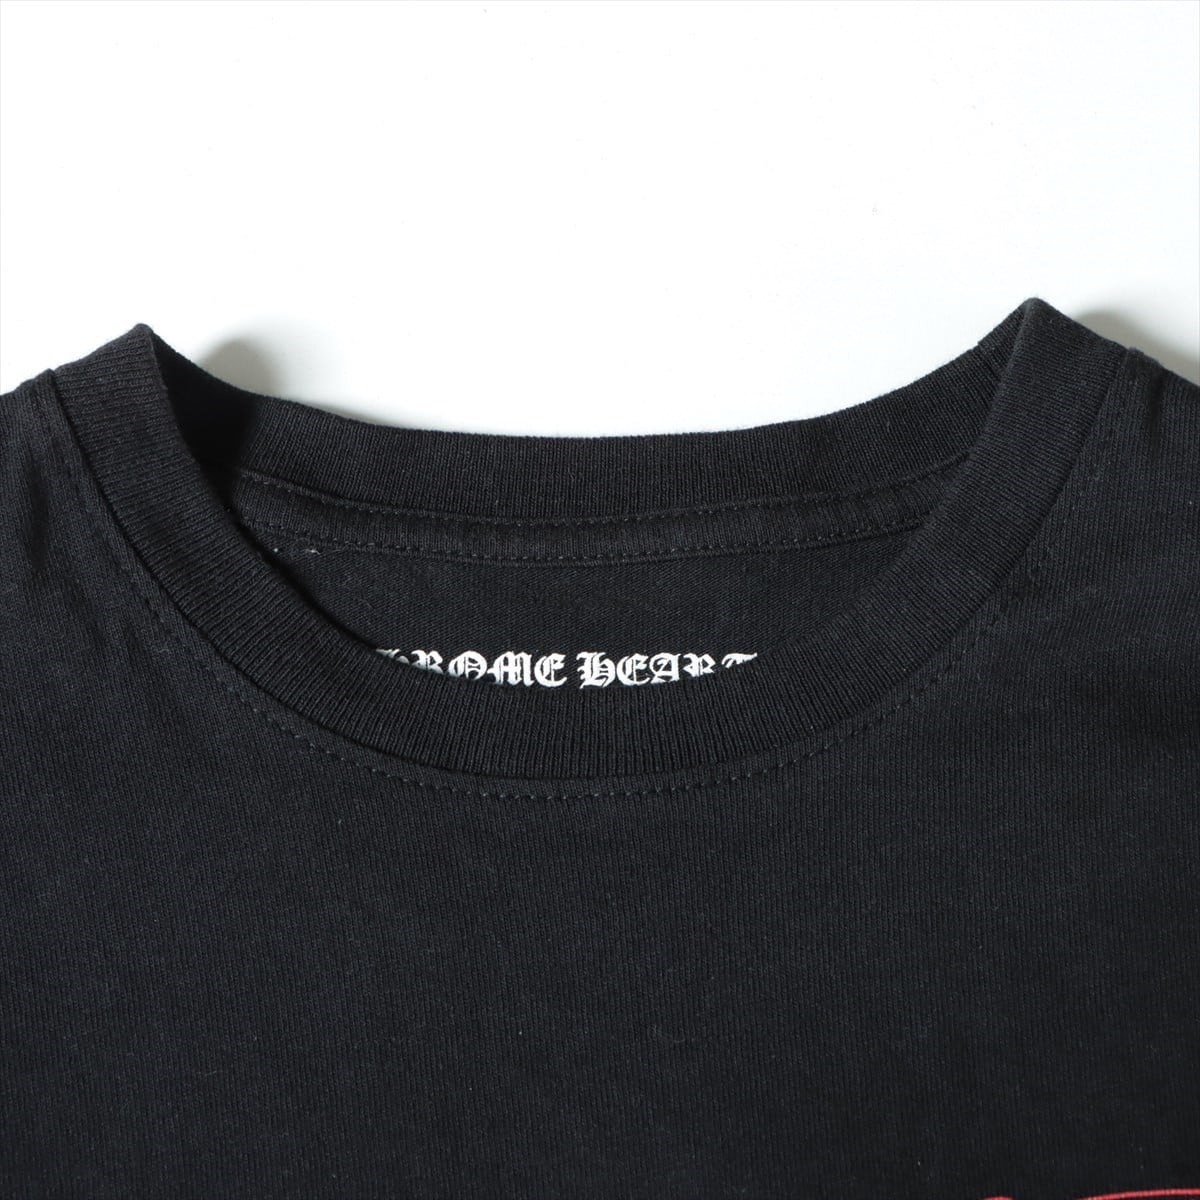 Chrome Hearts Matty Boy T-shirt Cotton XS Black